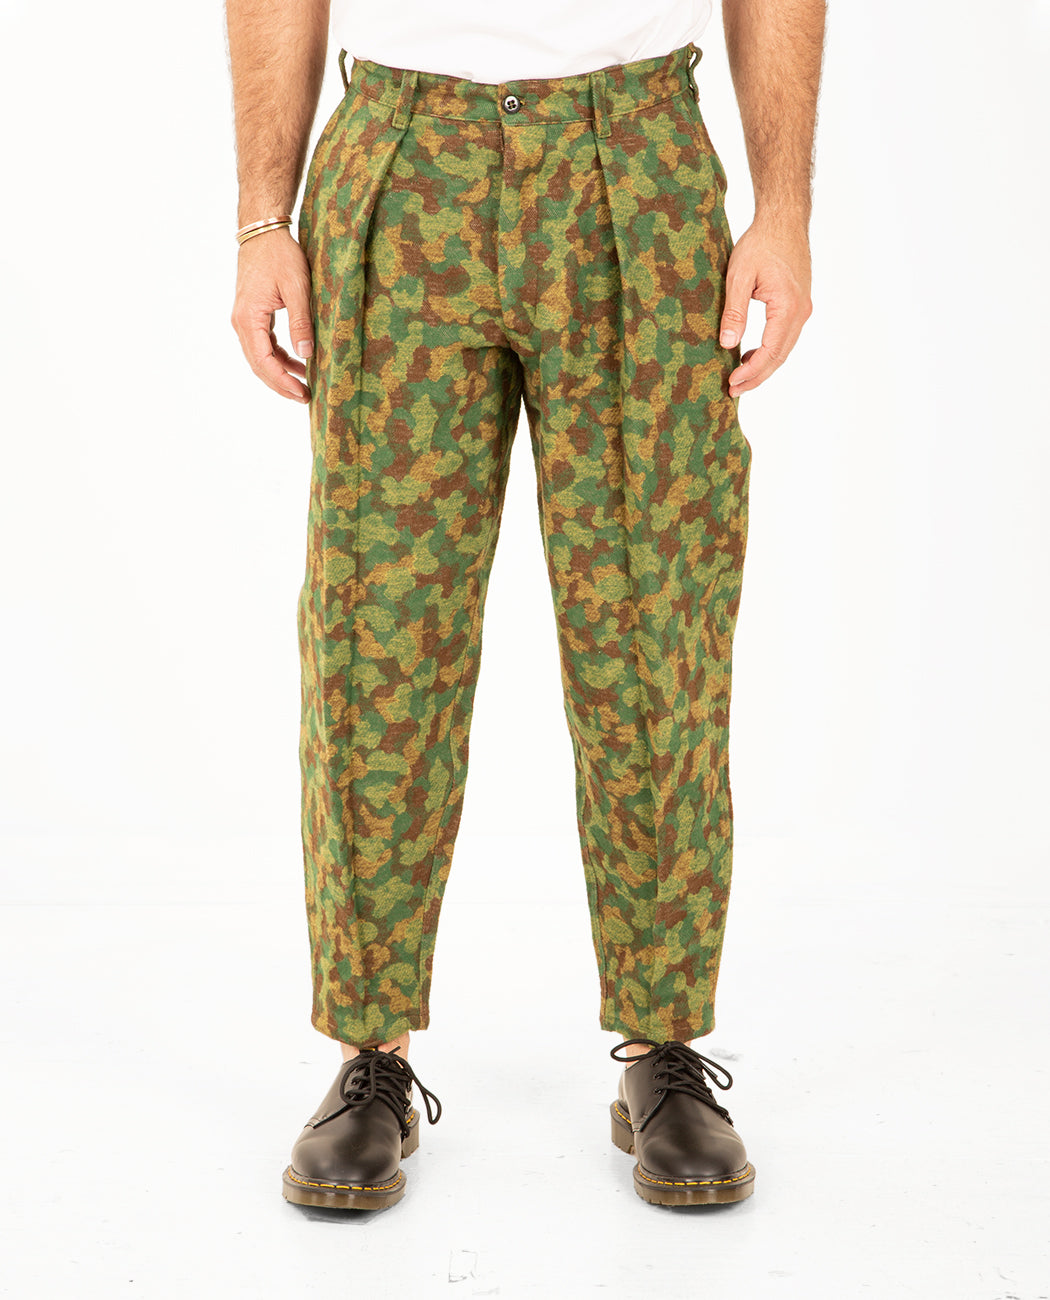 Vintage Bulgarian Army NCO Camo Pants [SOLD]🚩 • Waist 34” #camouflage #camo  #militarycamoflauge | Instagram